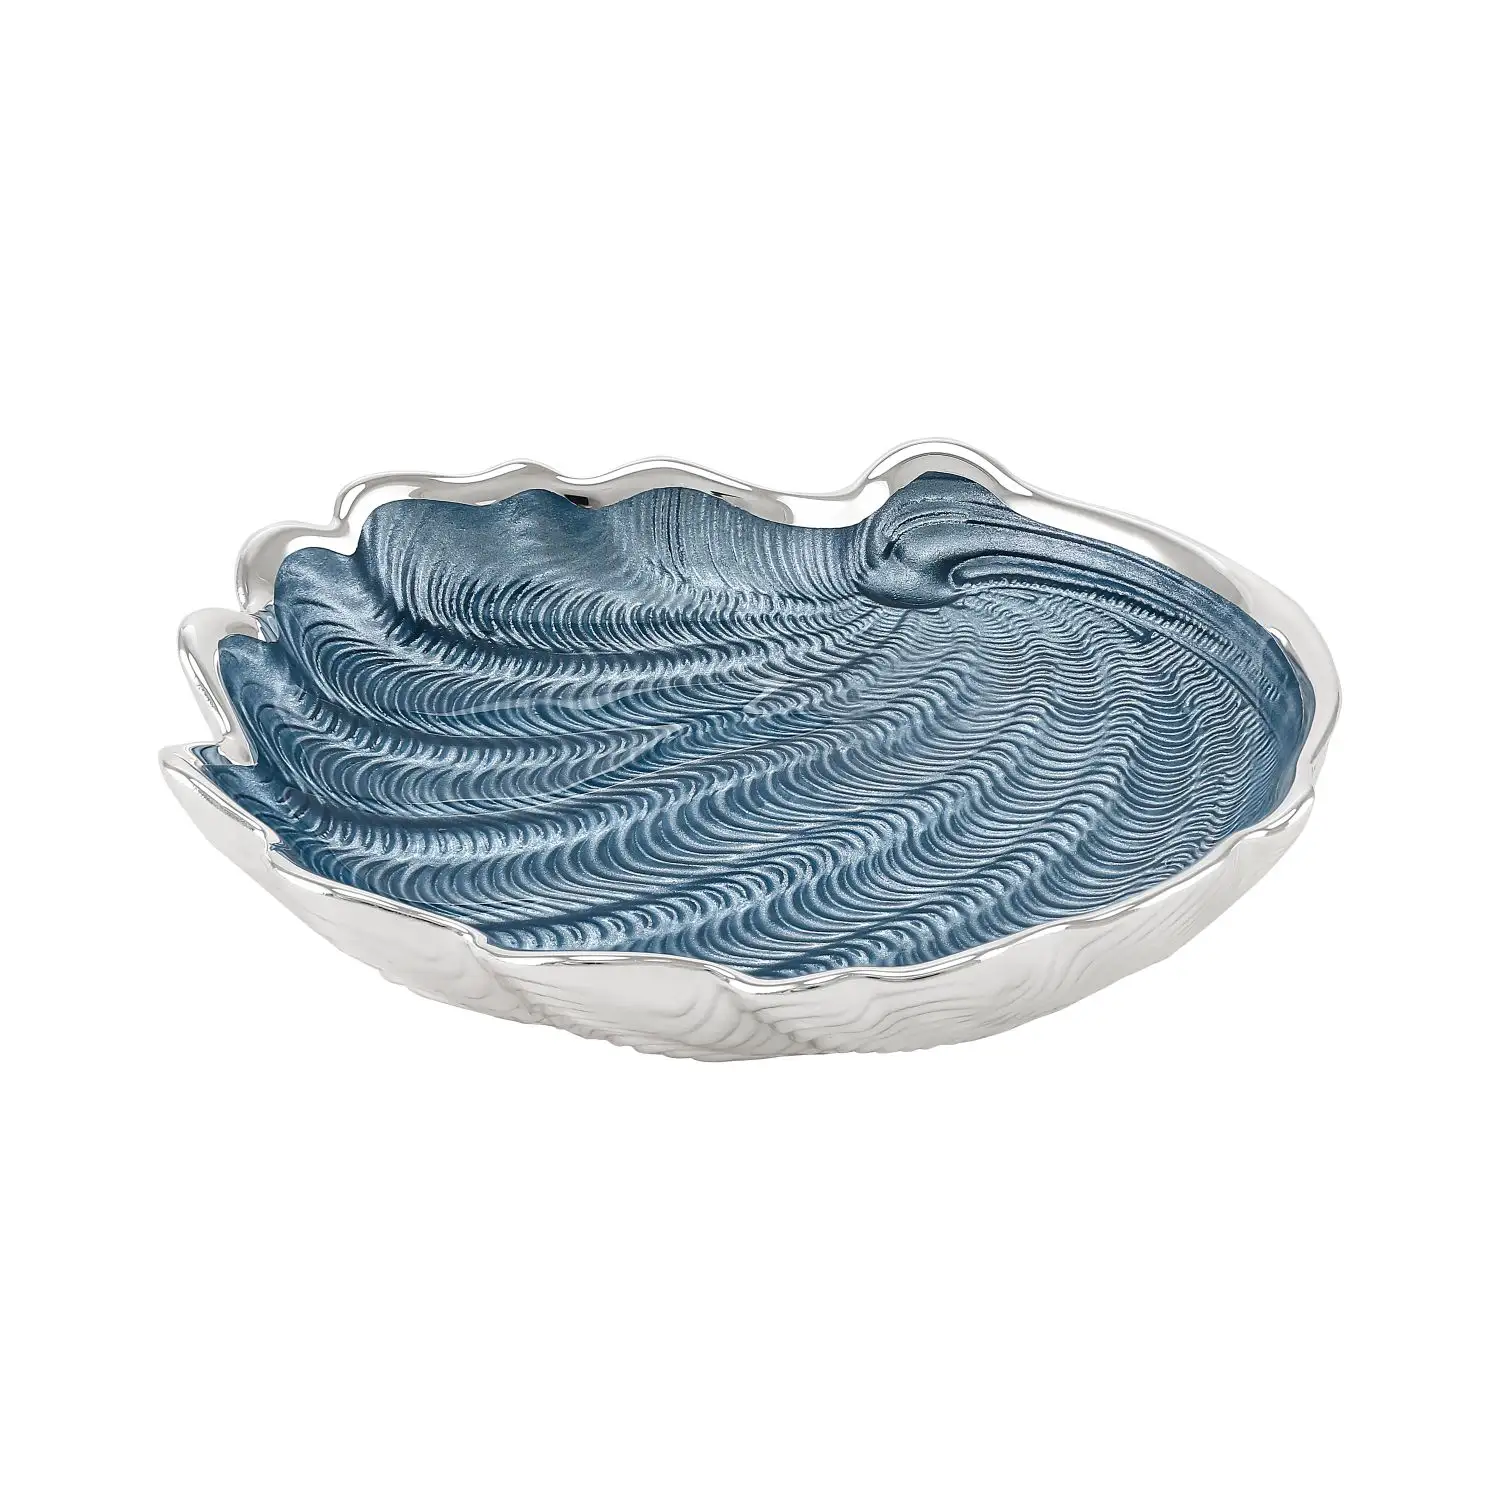 Тарелка стеклянная CONCHIGLIA (цвет небесно-голубой) диаметр 15 см тарелка стеклянная conchiglia цвет песочный диаметр 15 см